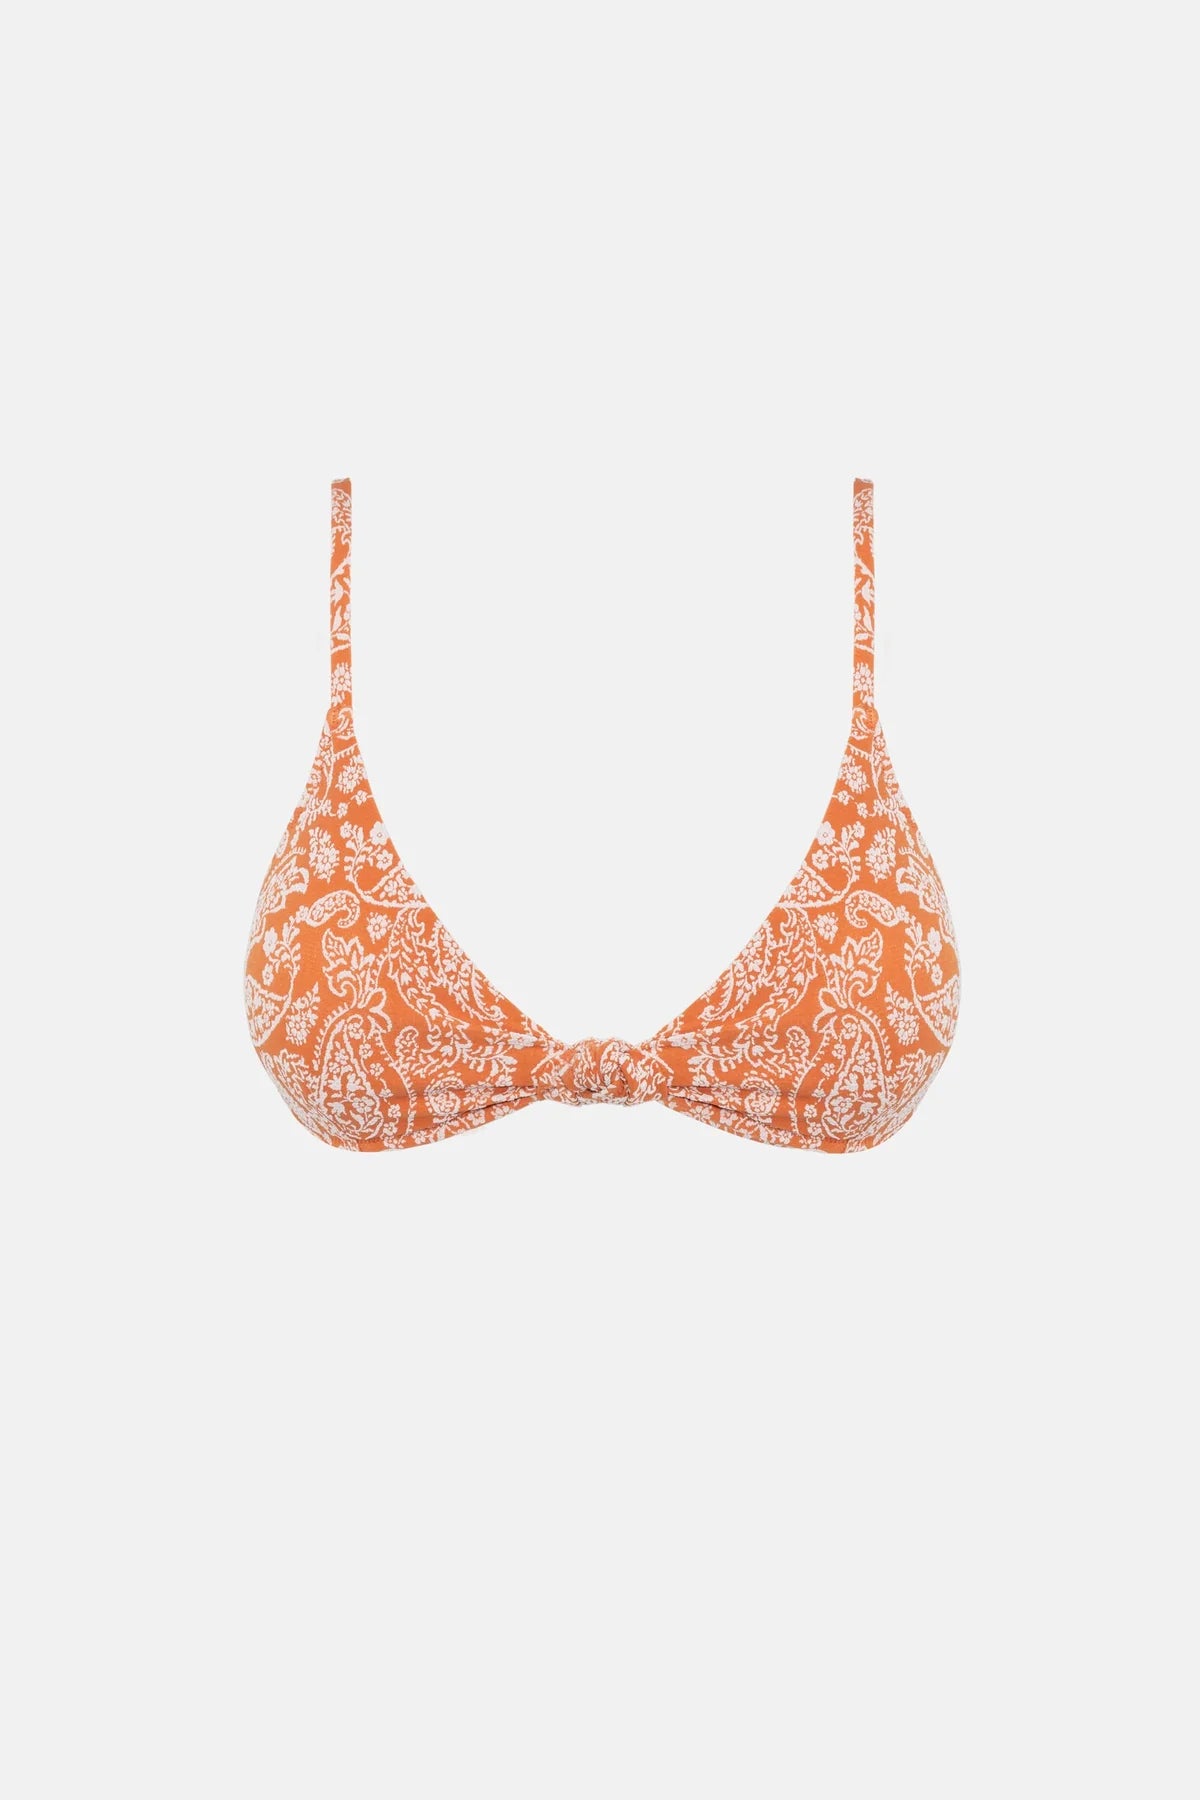 Rhythm Paisley Top - Orange Swim Tops - Bralette Swimsuit Top - Lulus